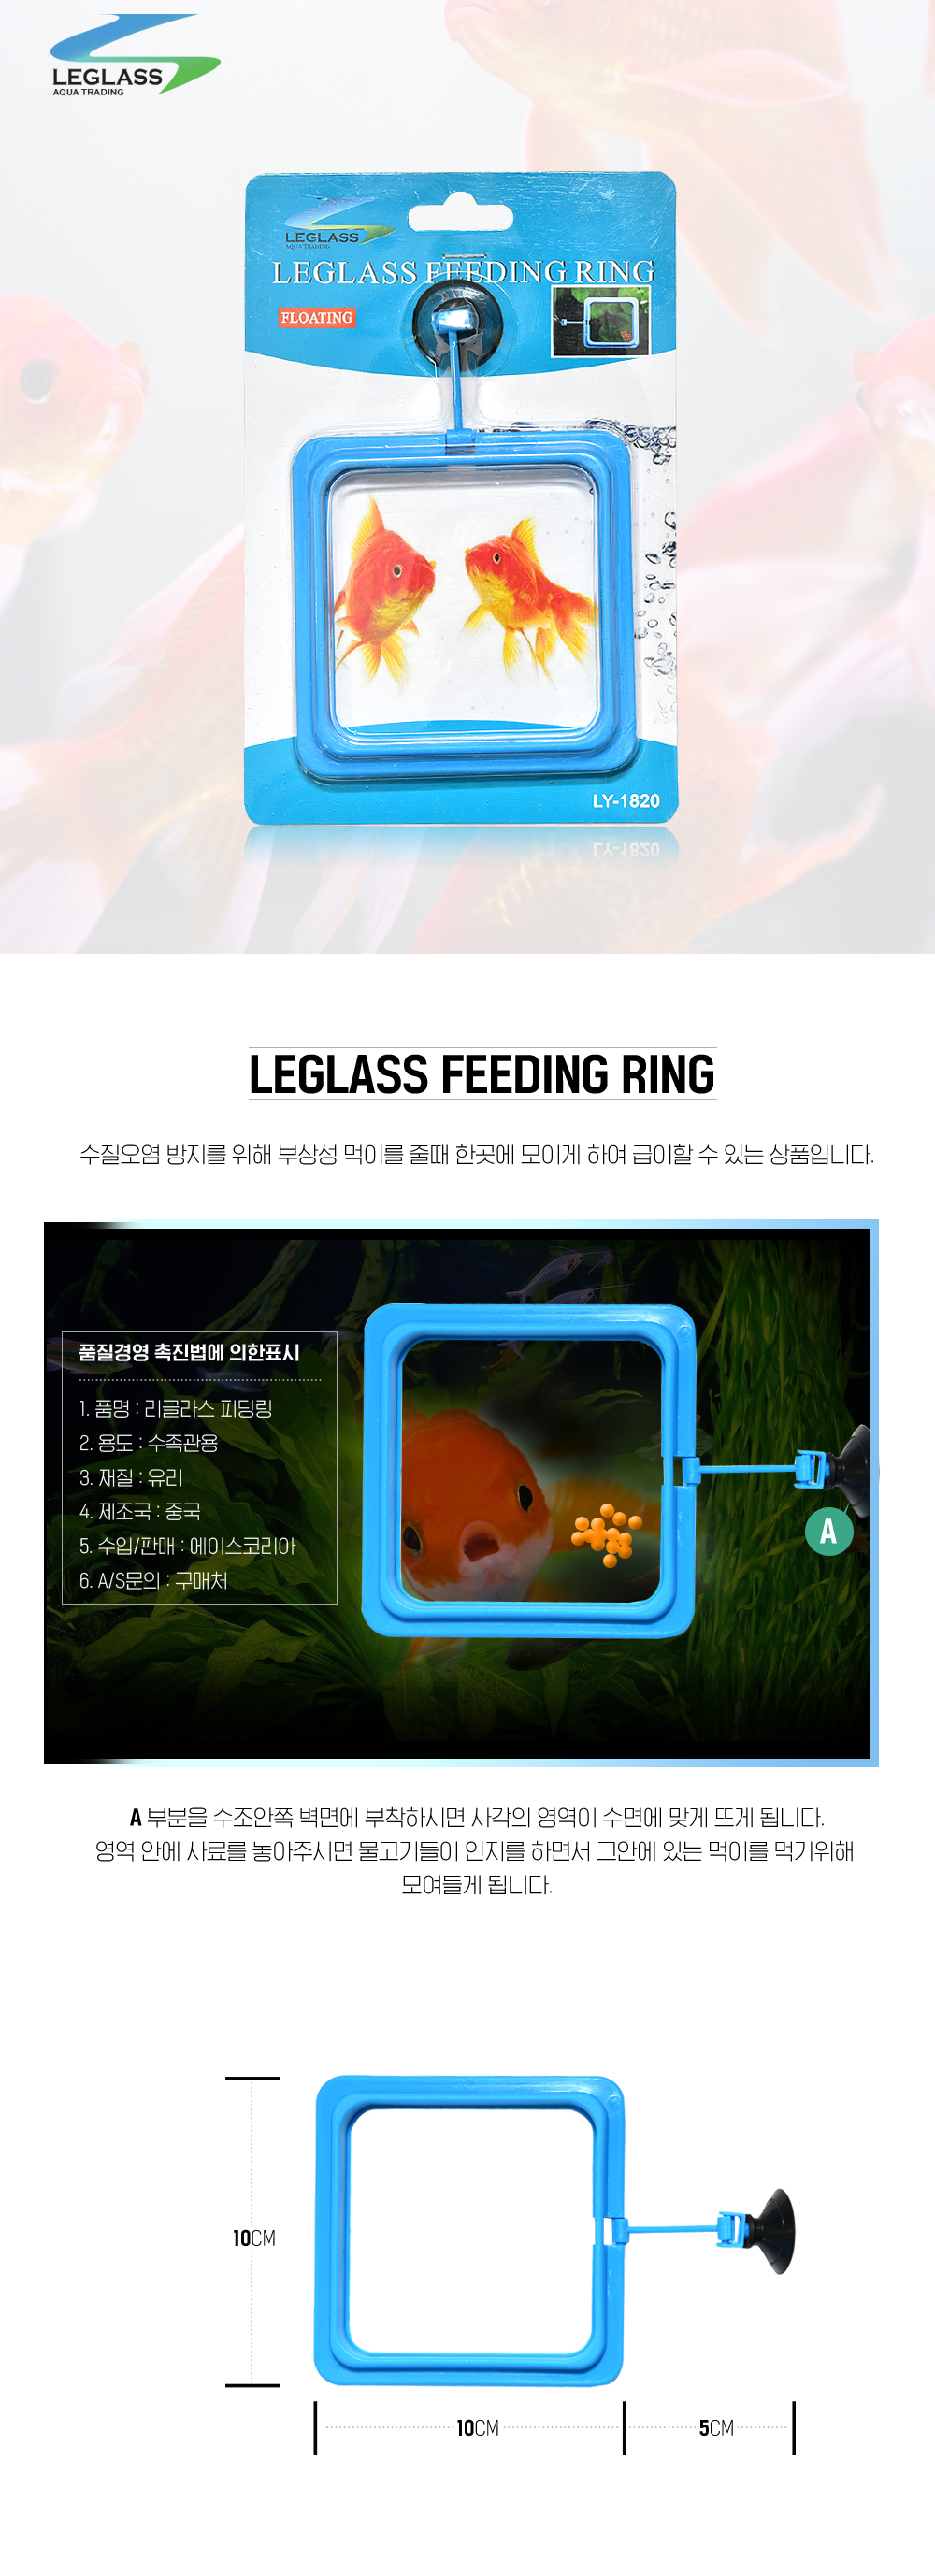 Leglass_FeedingRing_LY1820_153141.jpg